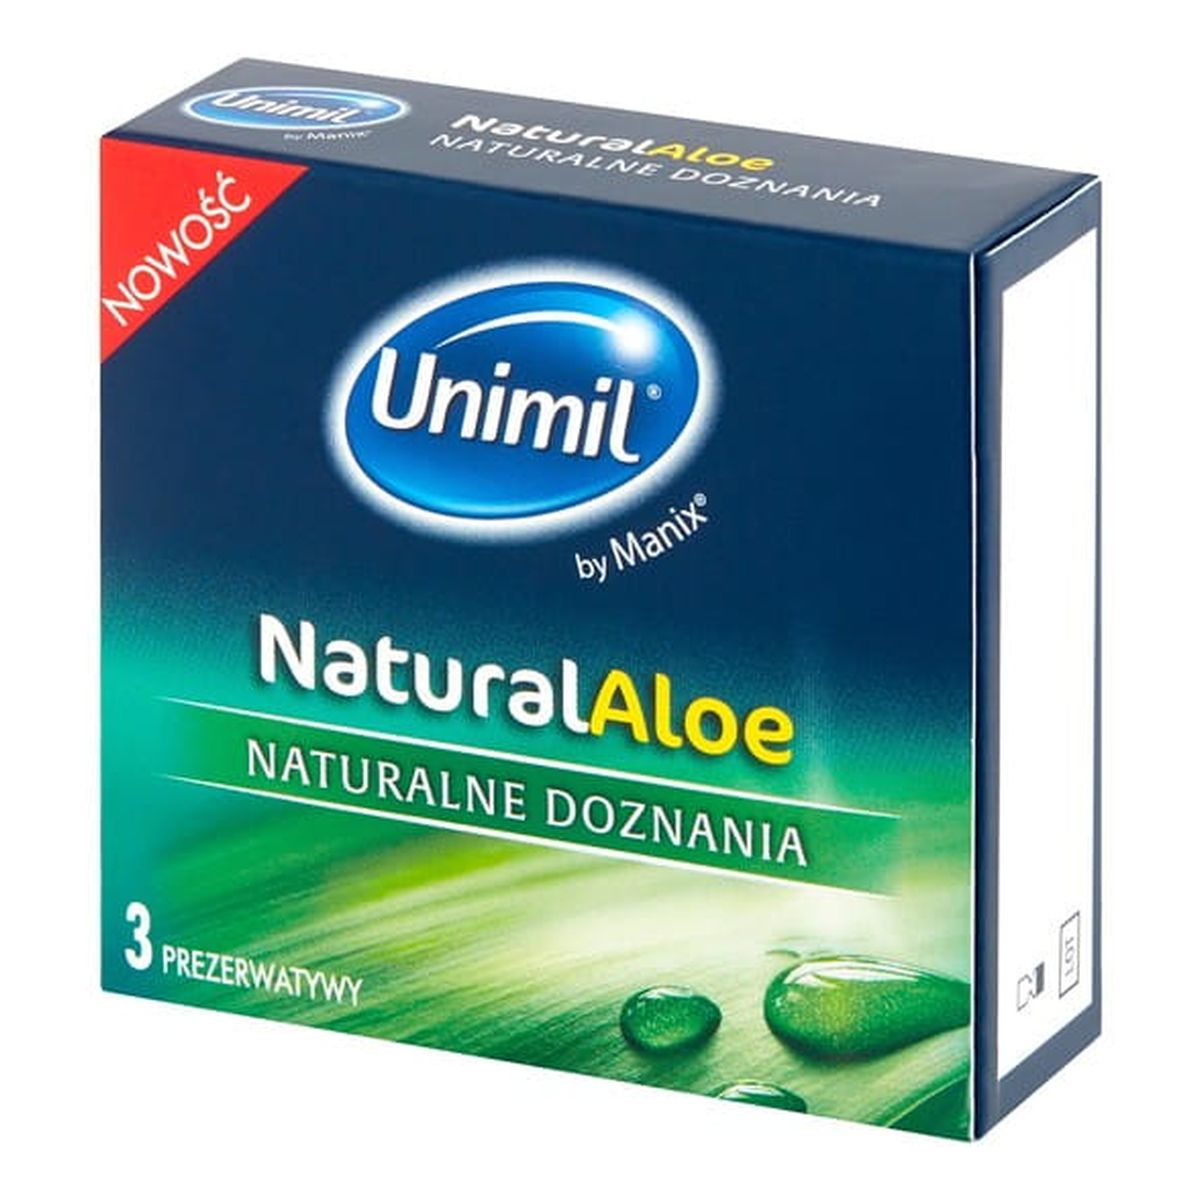 Unimil Natural aloe lateksowe prezerwatywy 3szt